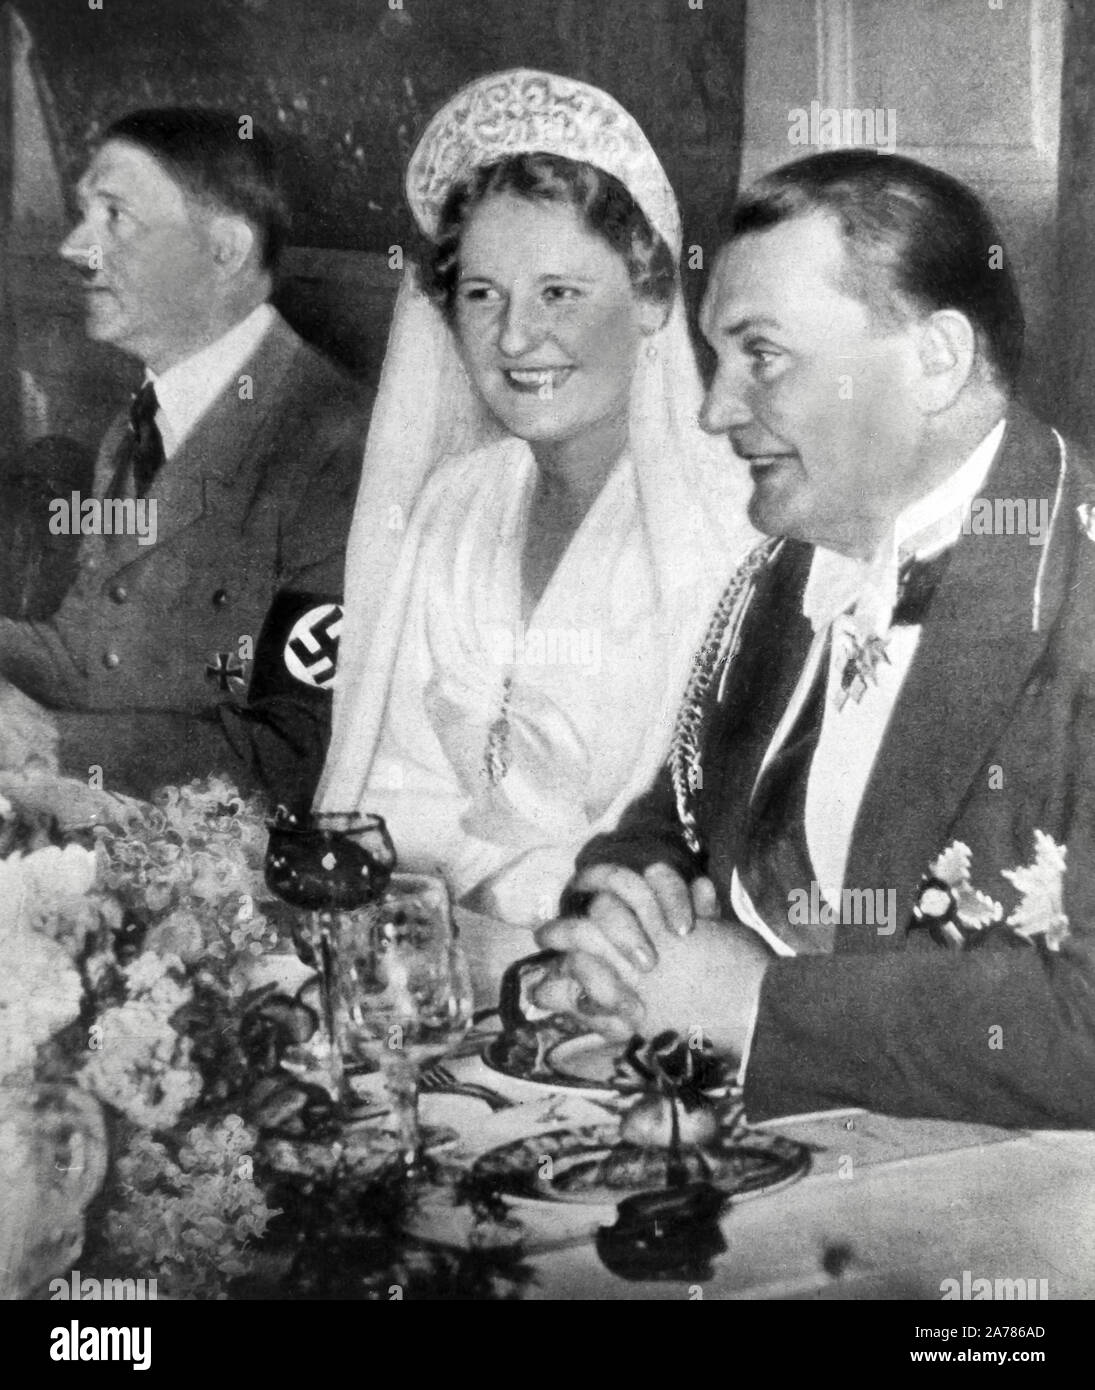 adolf hitler at the wedding of hermann goering, 1935 Stock Photo